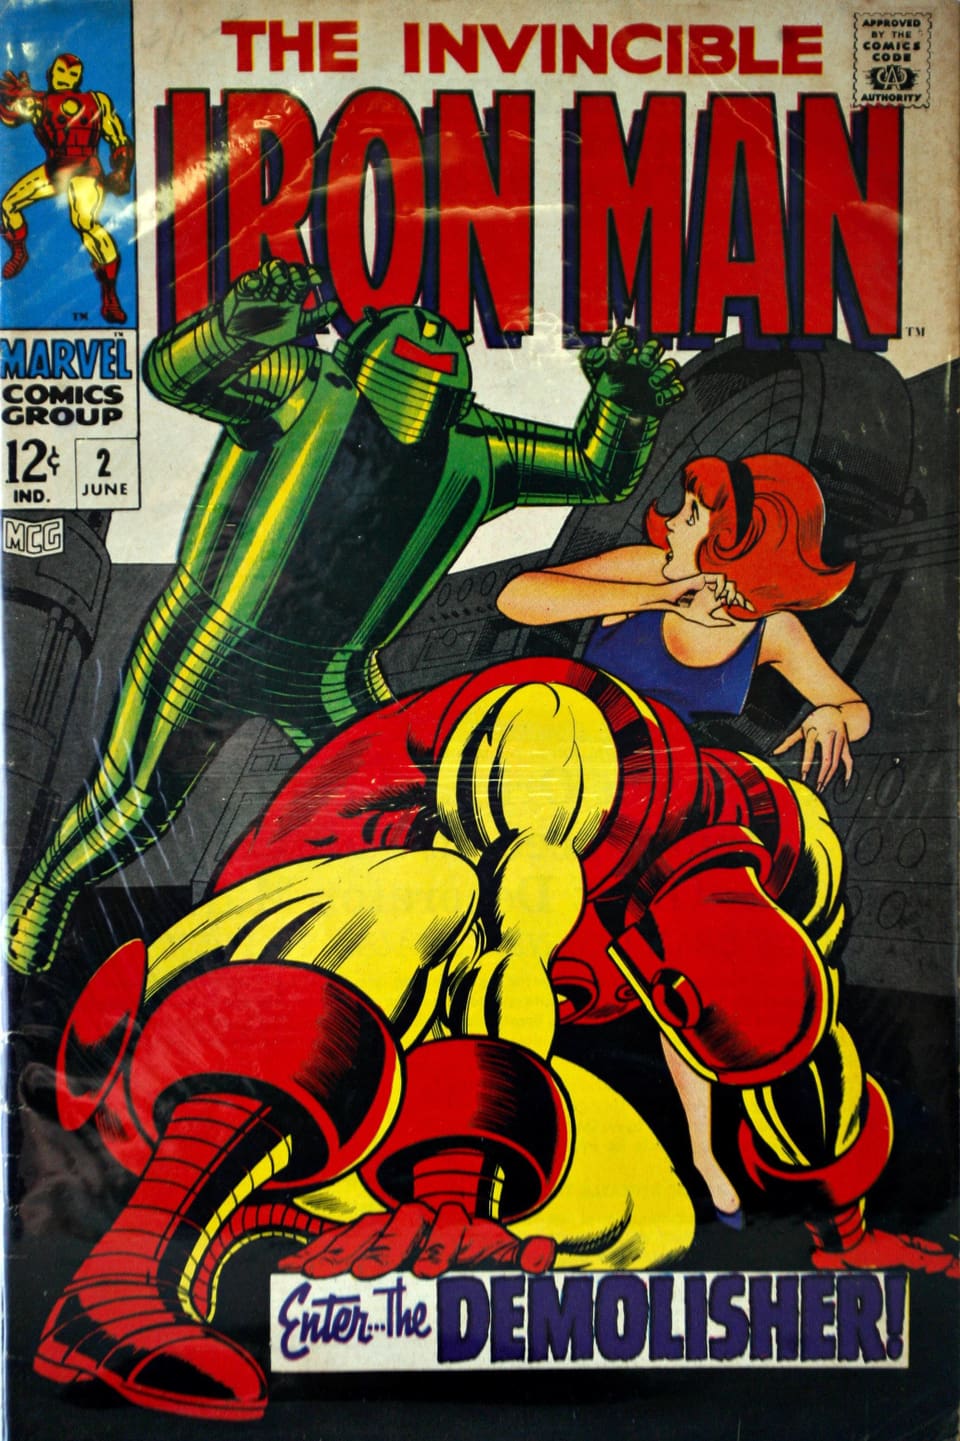 Cover eines Comics